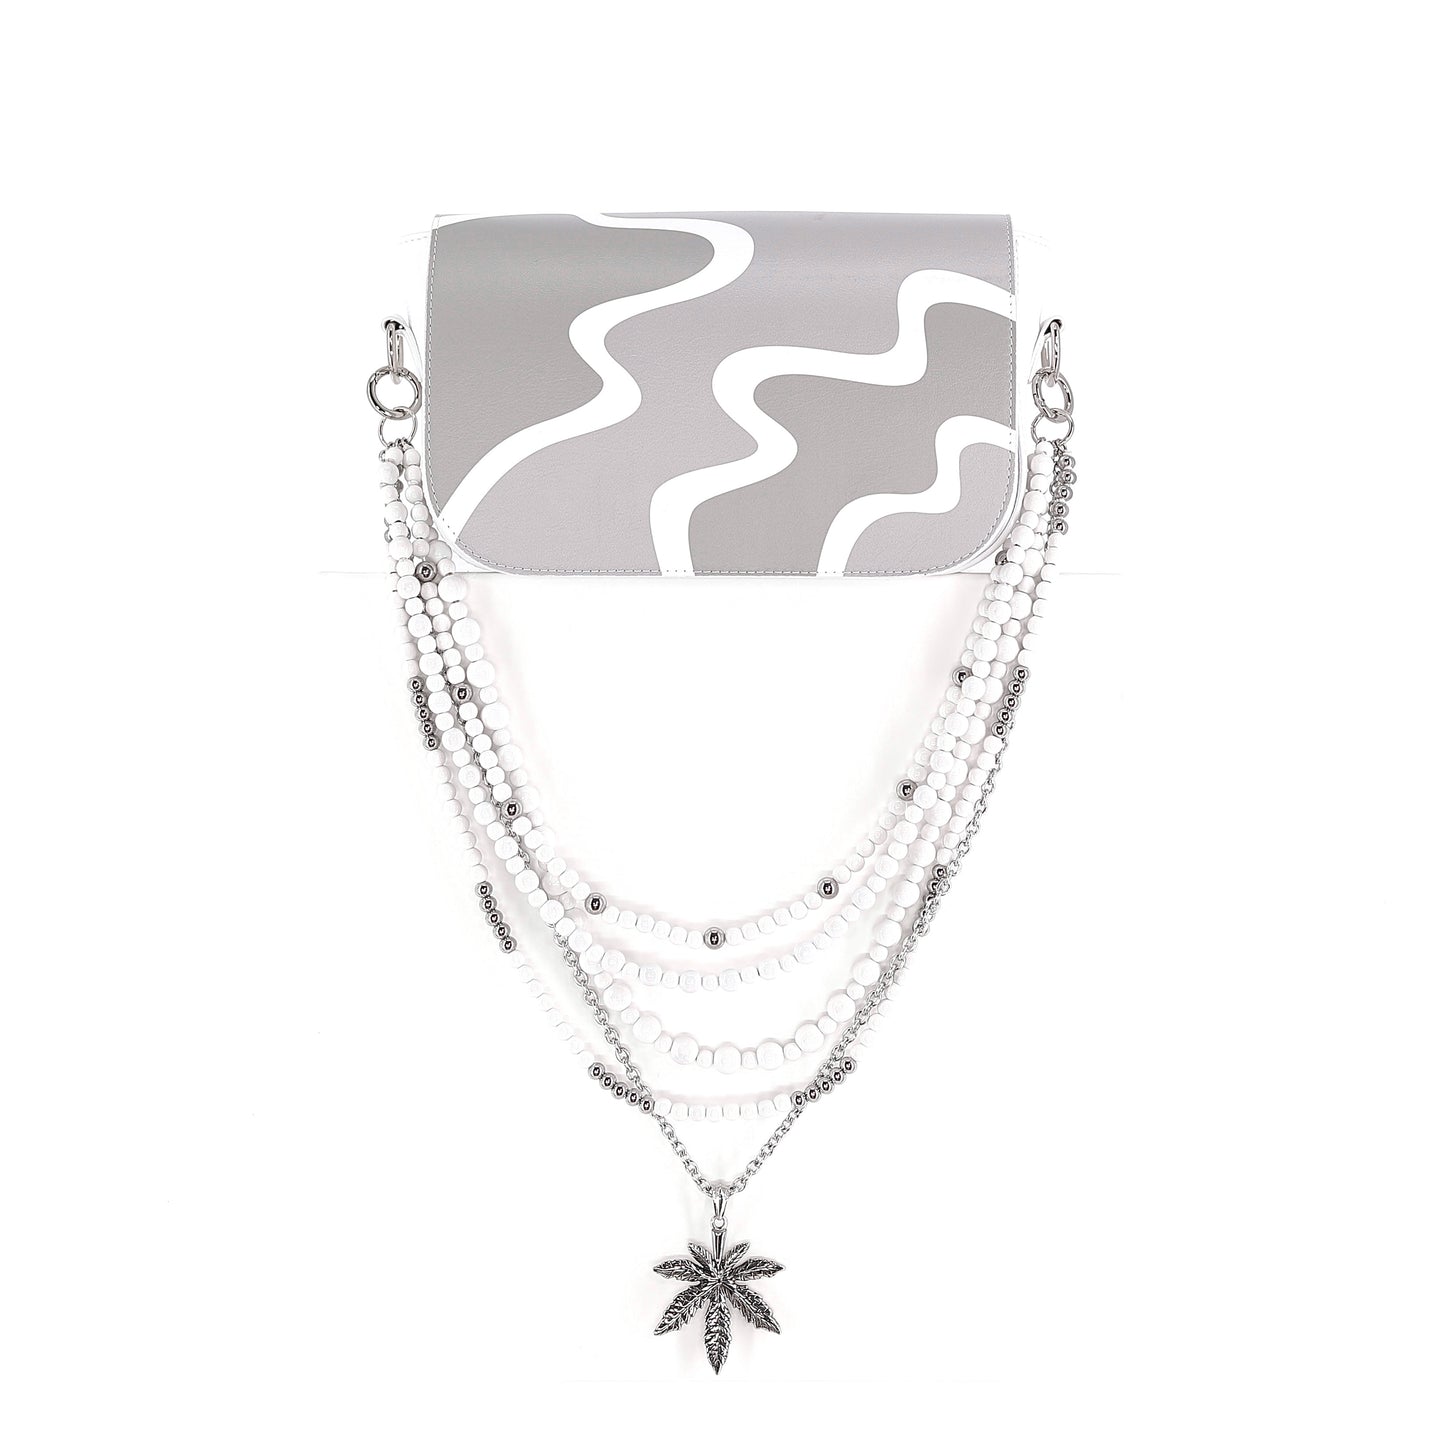 COOL REVOLUZZA 5 jewlery chain in white with marijuana  pendant - CUSTOM MADE